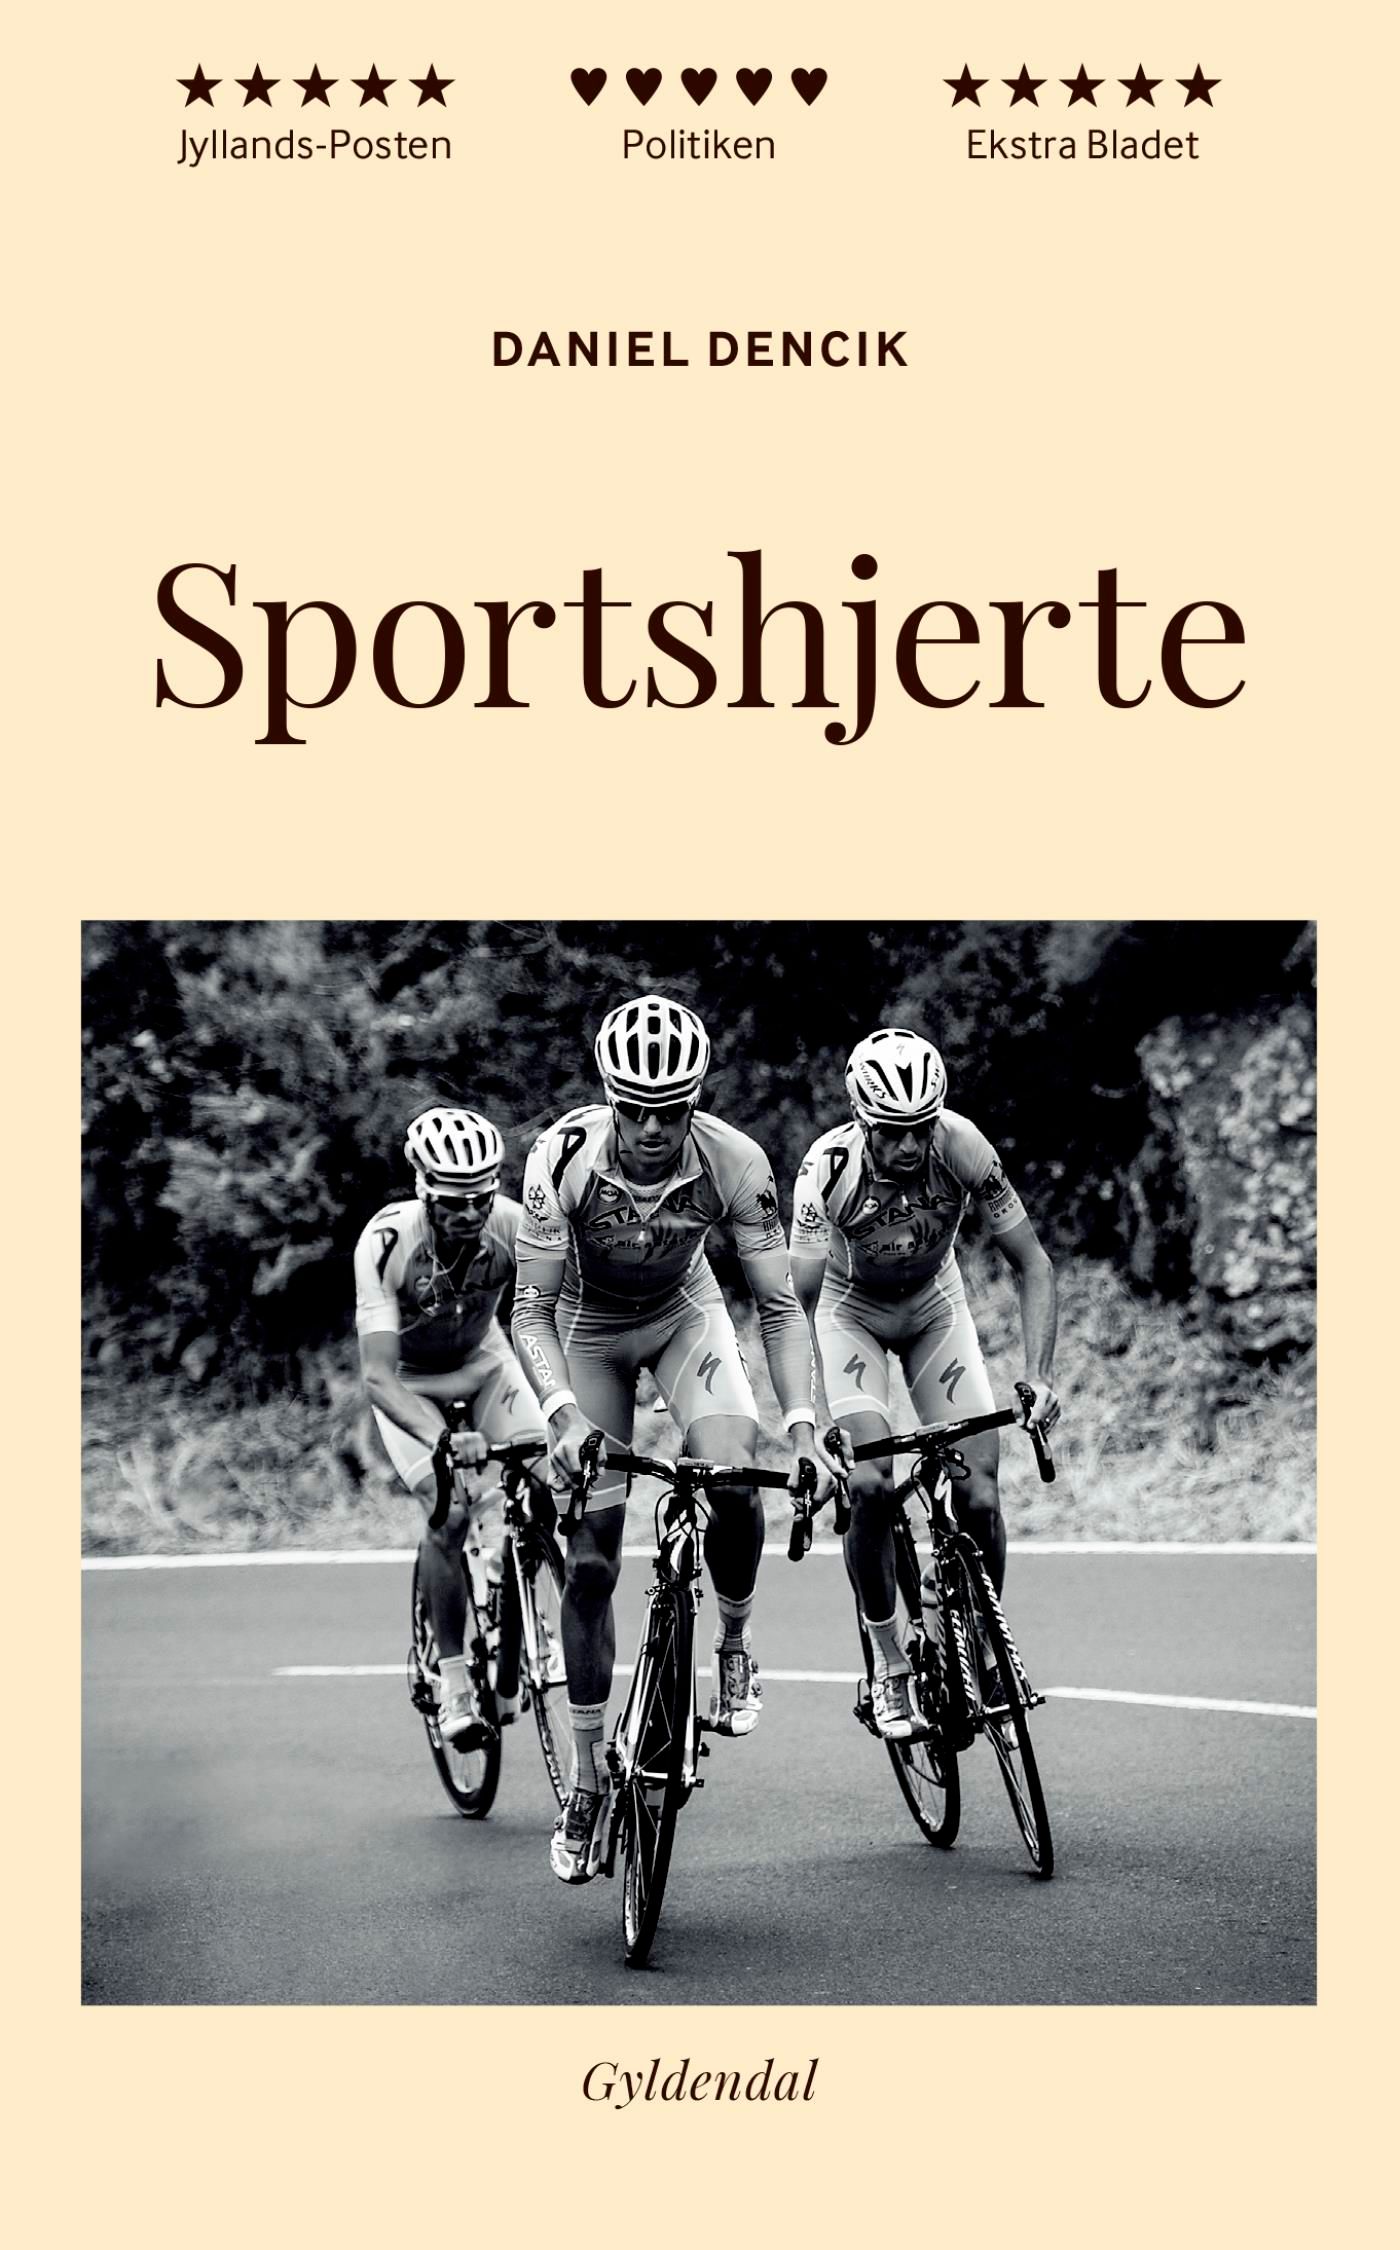 Sportshjerte, eBook by Daniel Dencik